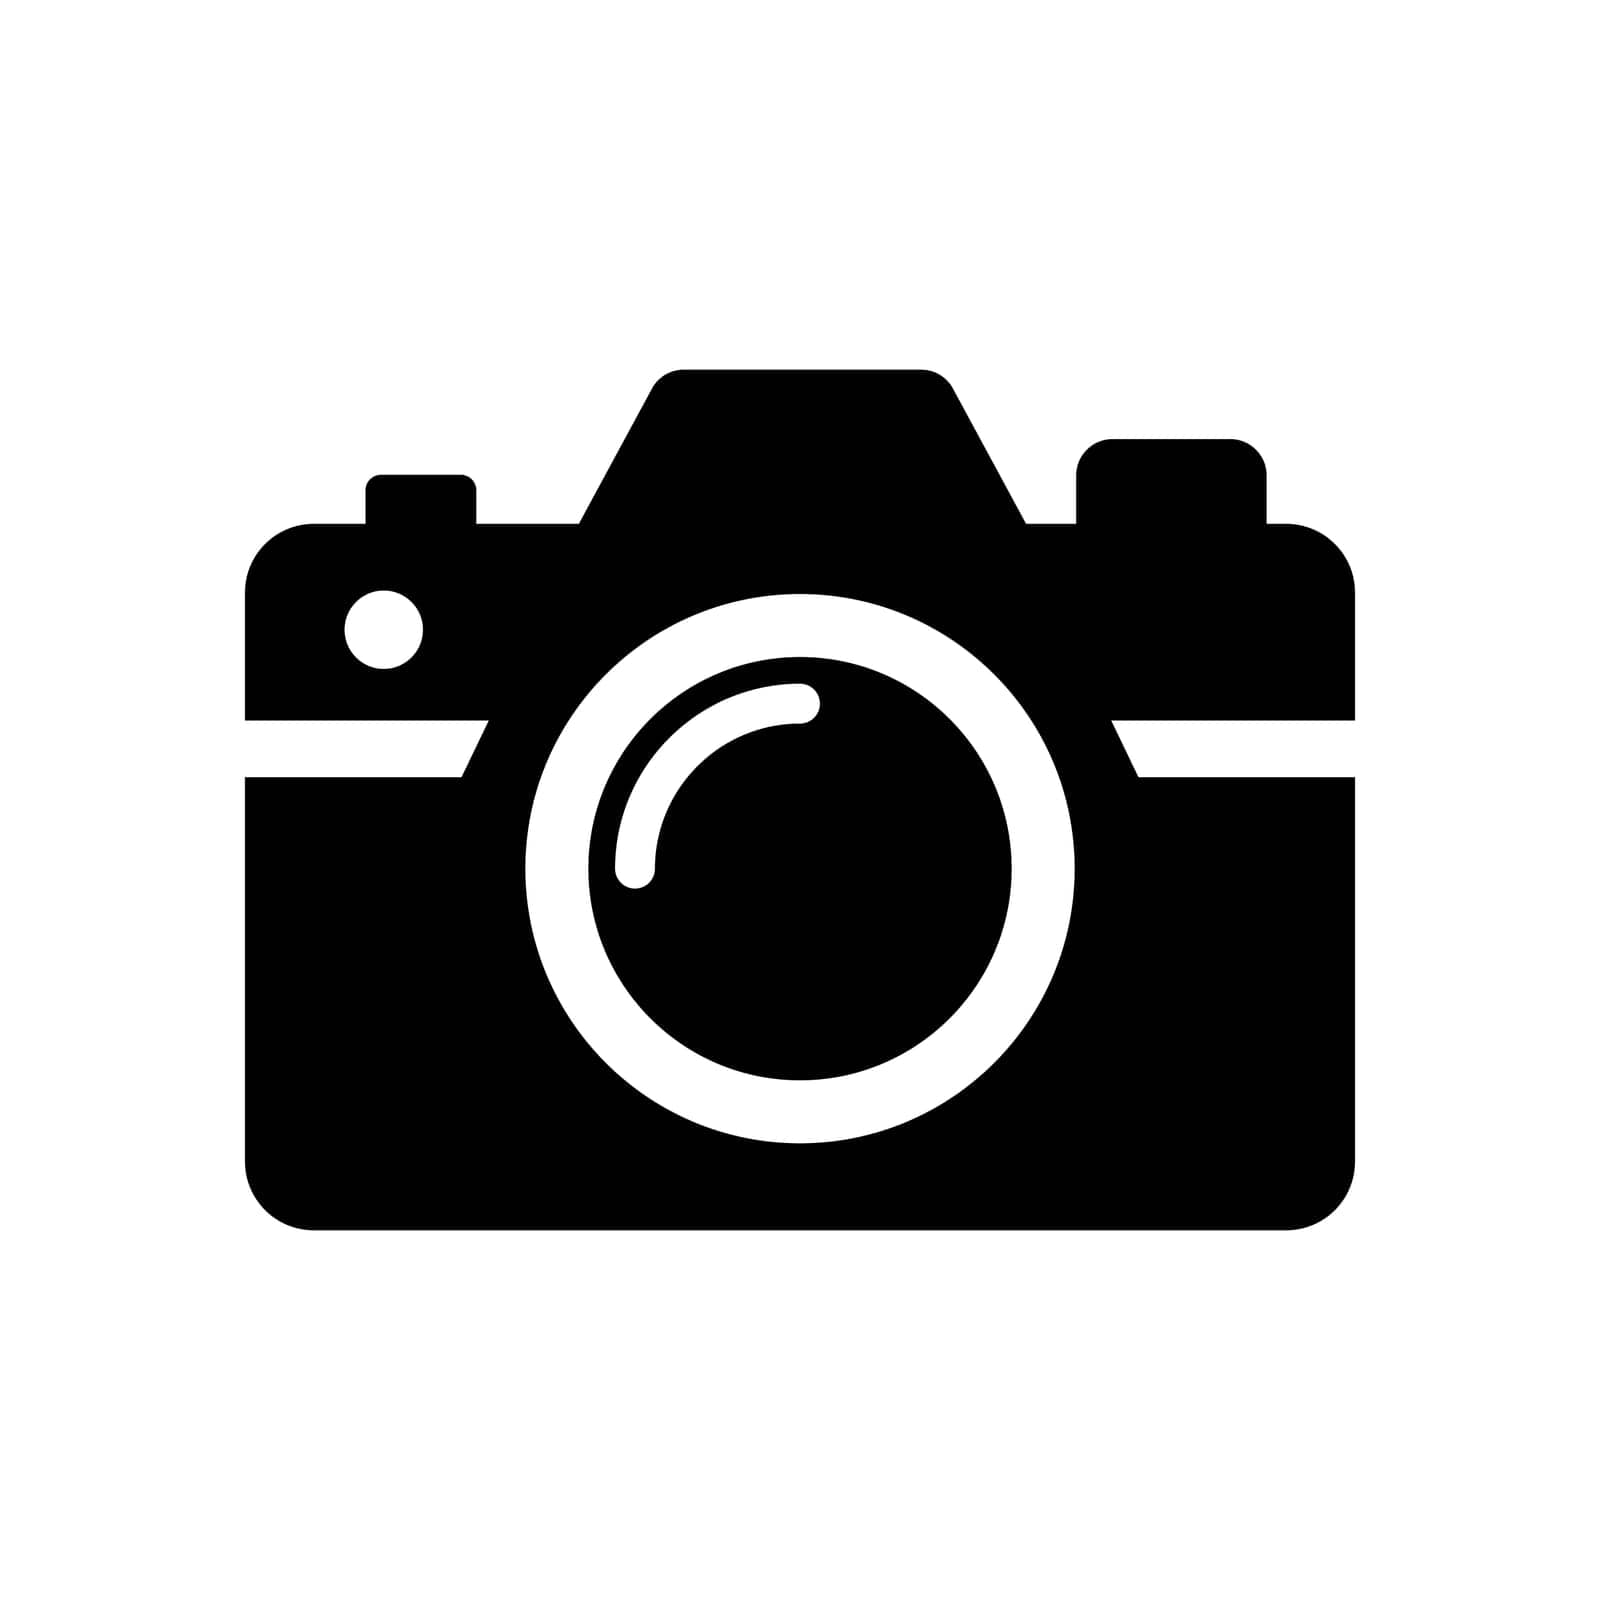 Camera icon. Photo camera symbol. Black icon of camera isolated on white by Chekman